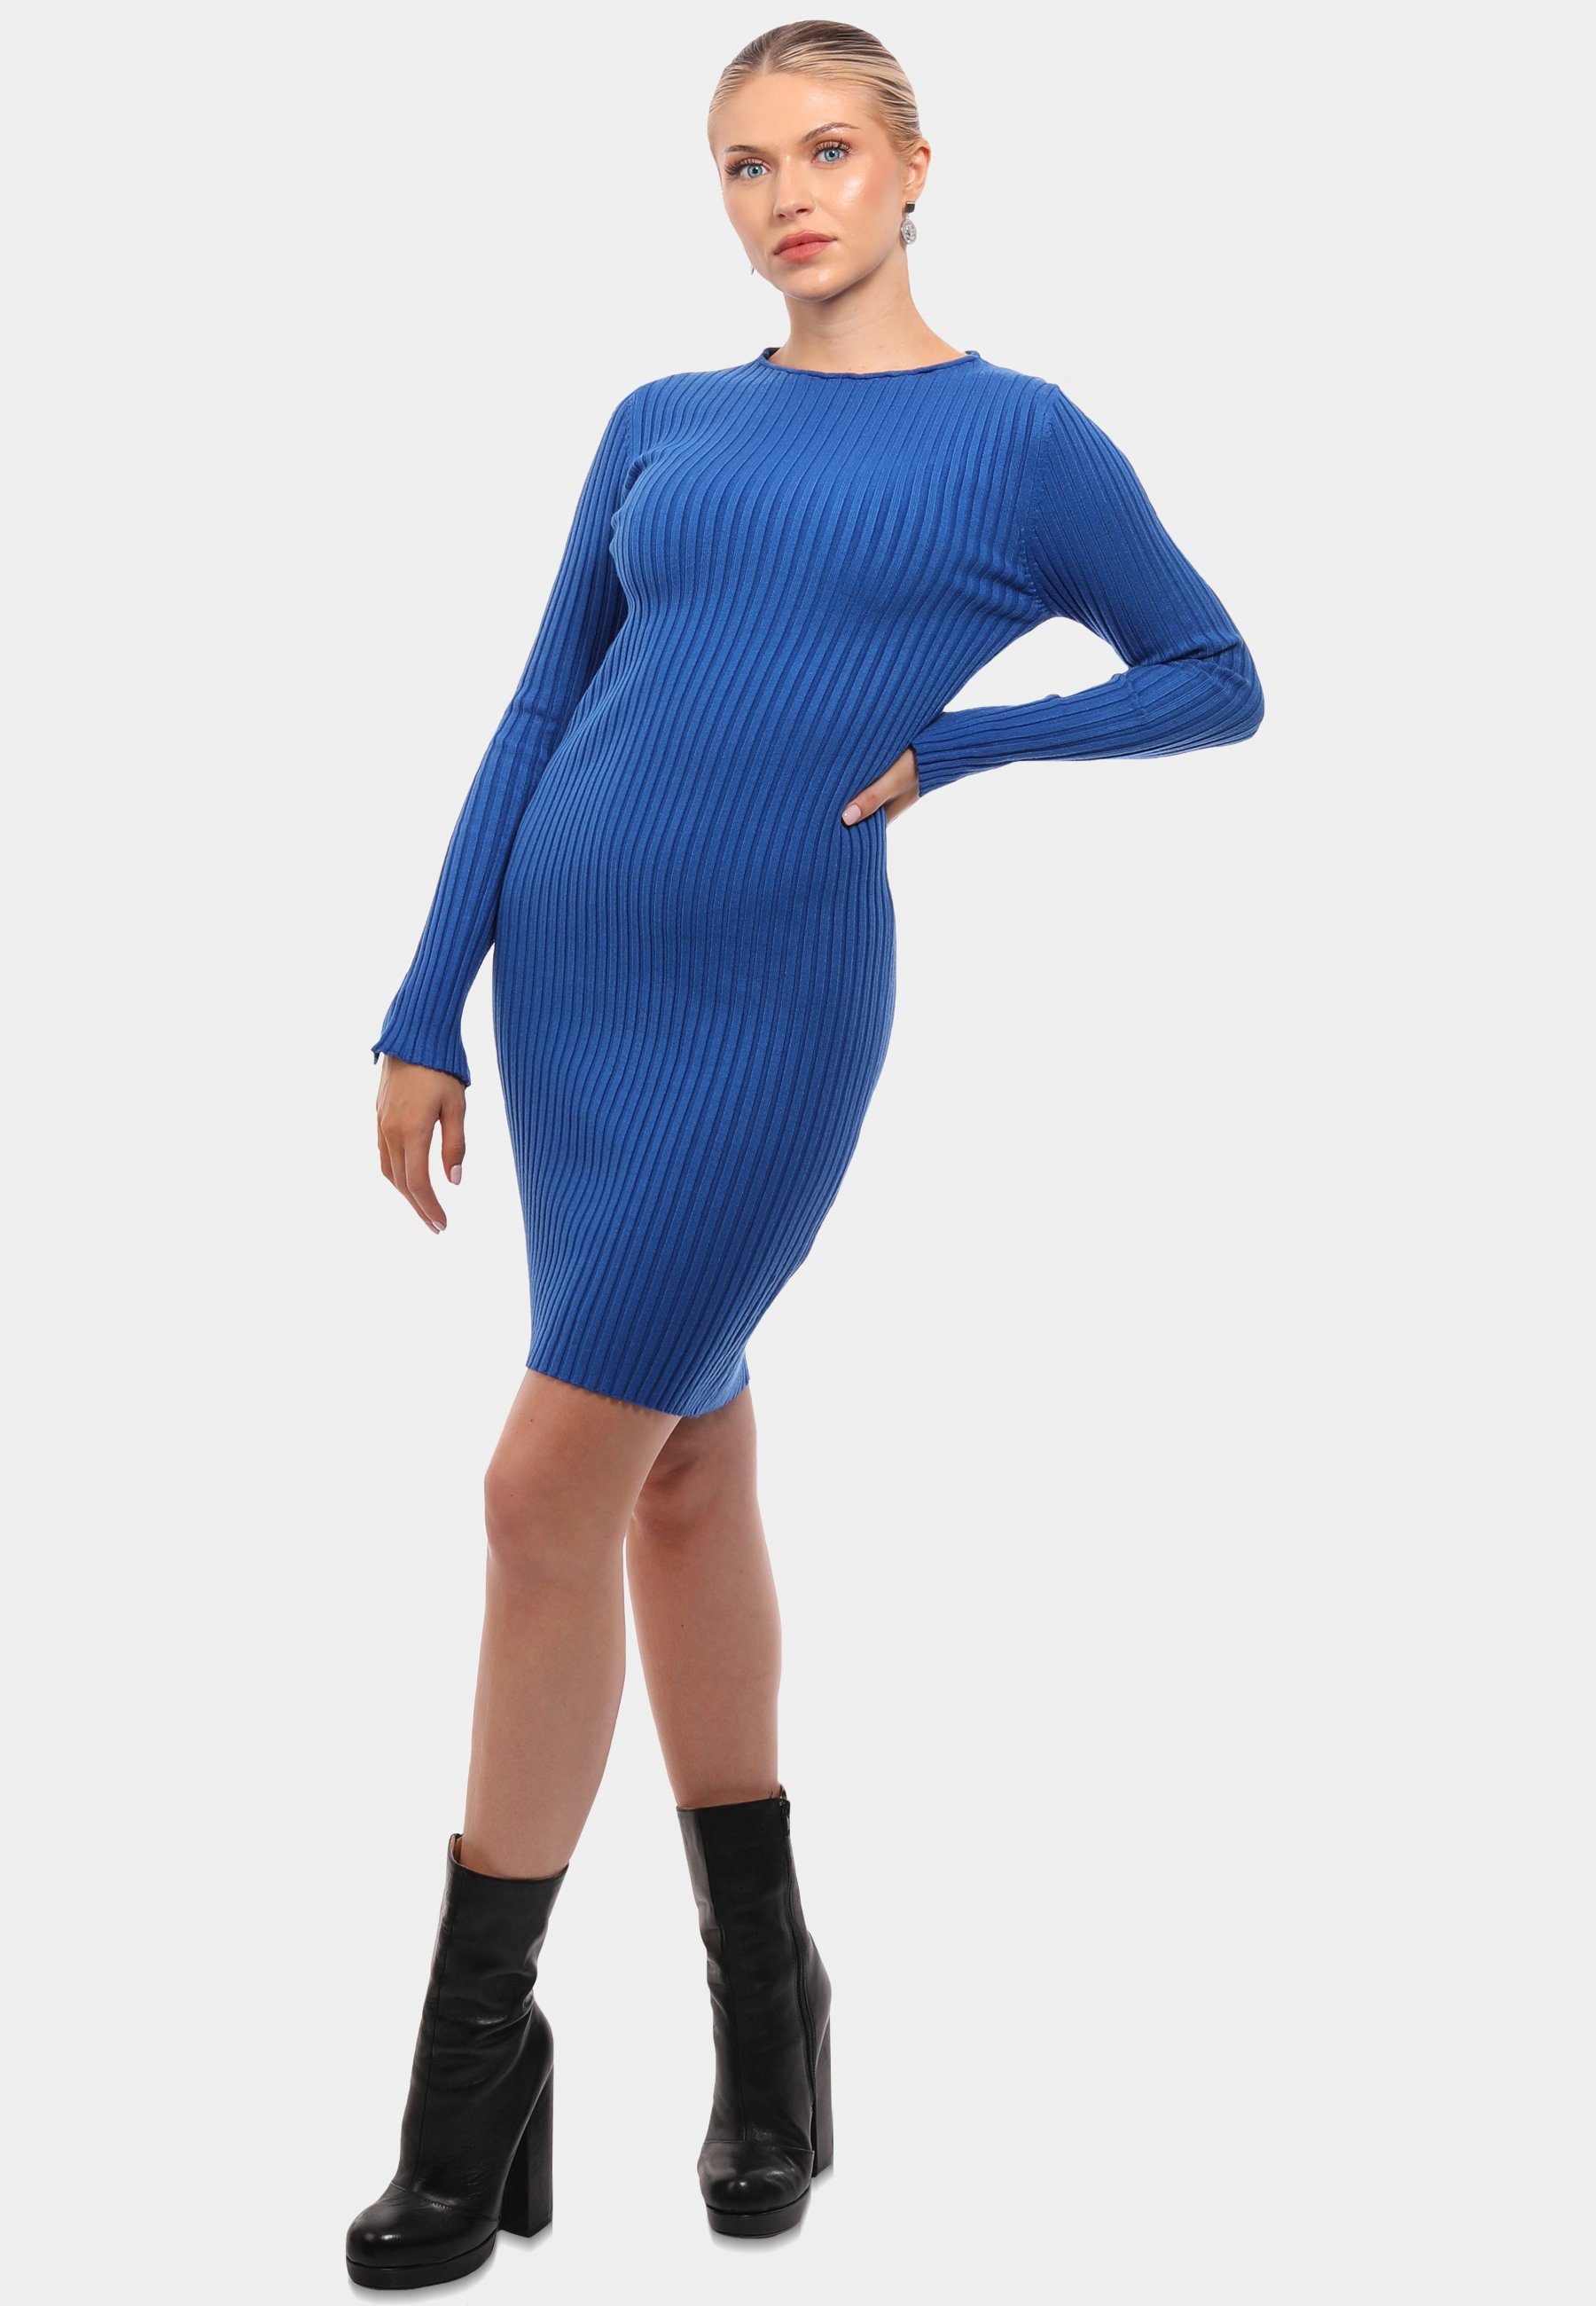 Langarm, Strickkleid Elegantes Fashion YC Set) & (Kein in Unifarbe Style Blau Strickkleid